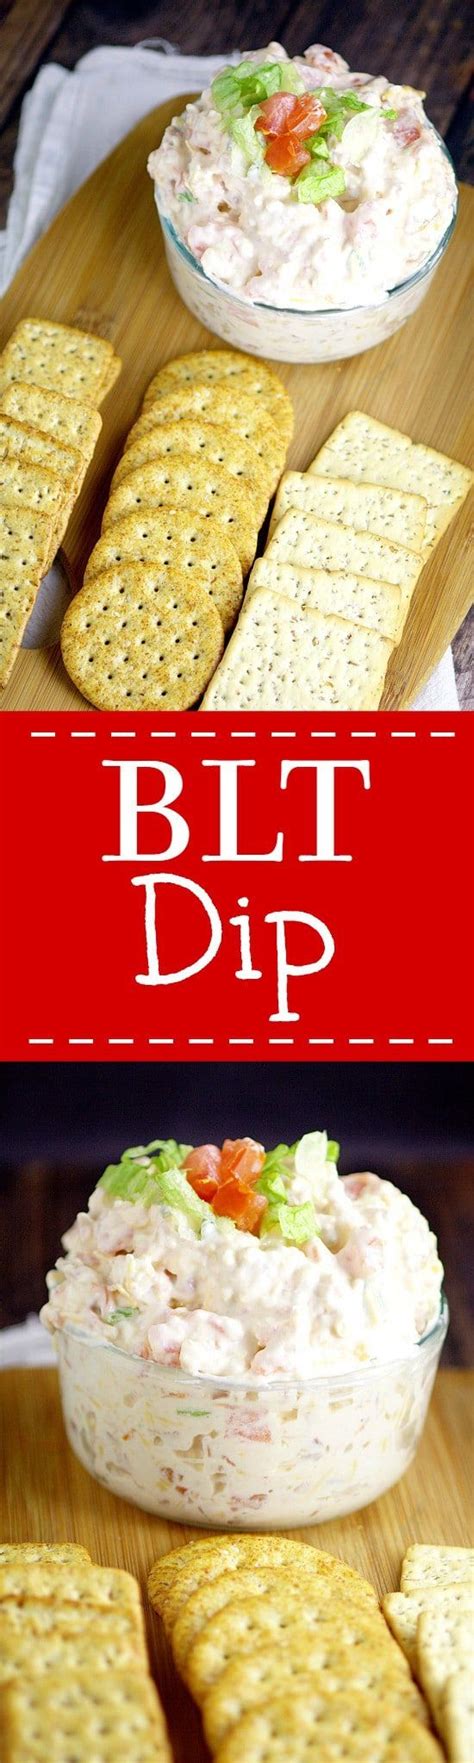 Blt Dip Yummy Dips Yummy Snacks Yummy Food Delicious Delish Dip Recipes Snack Recipes